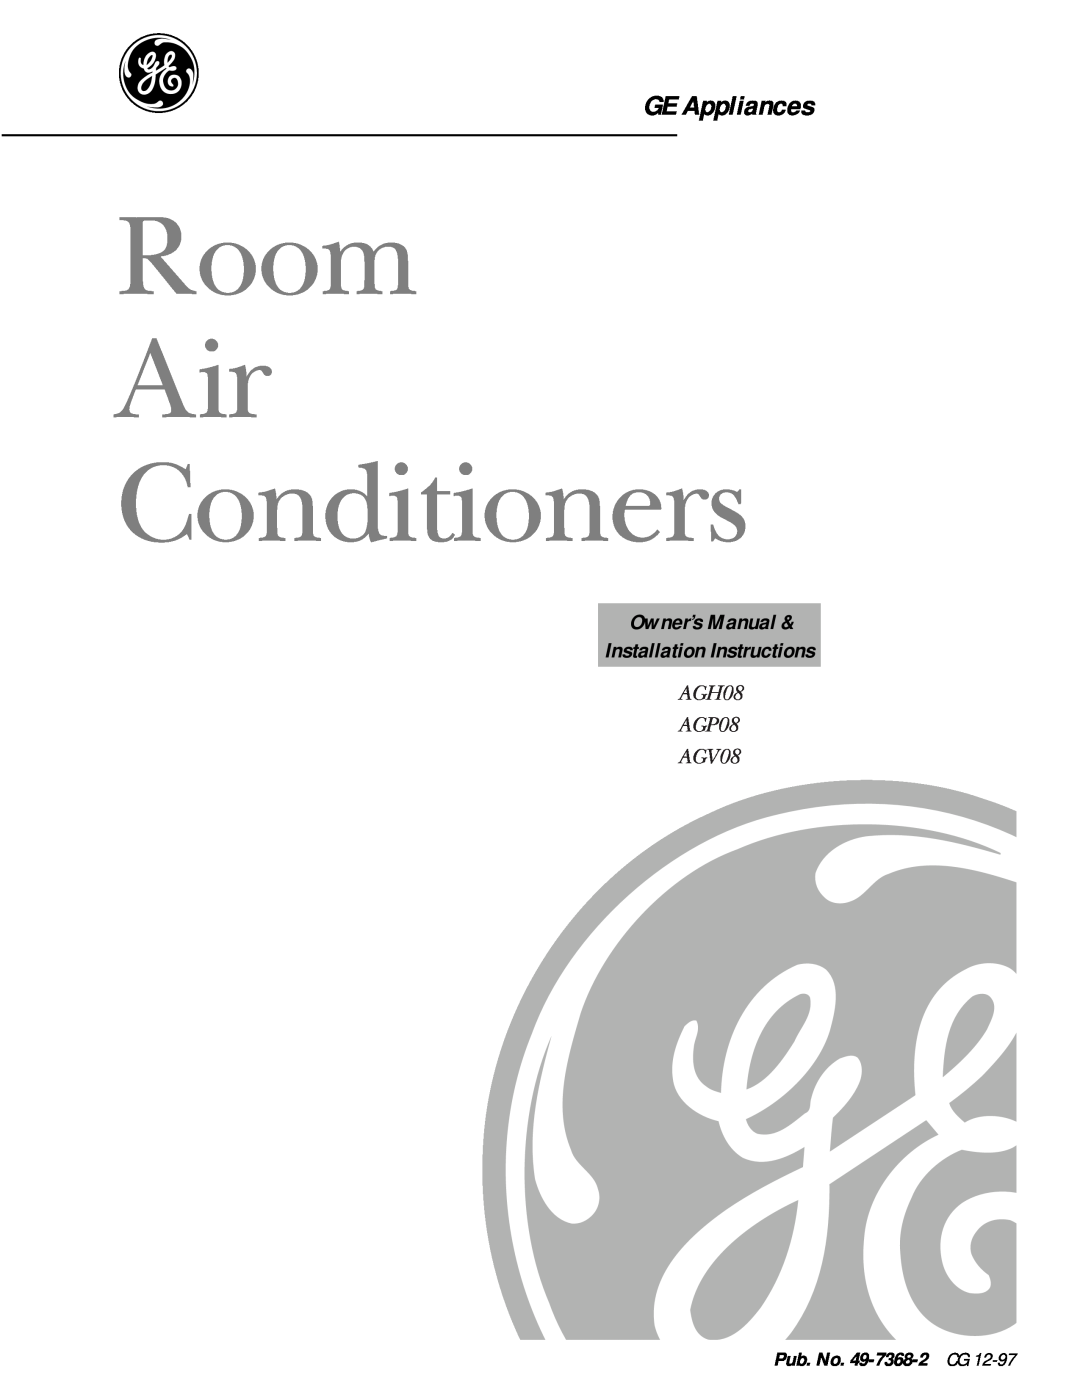 GE agp08 owner manual Pub. No. 49-7368-2 CG, Room Air Conditioners, GE Appliances, AGH08 AGP08 AGV08 